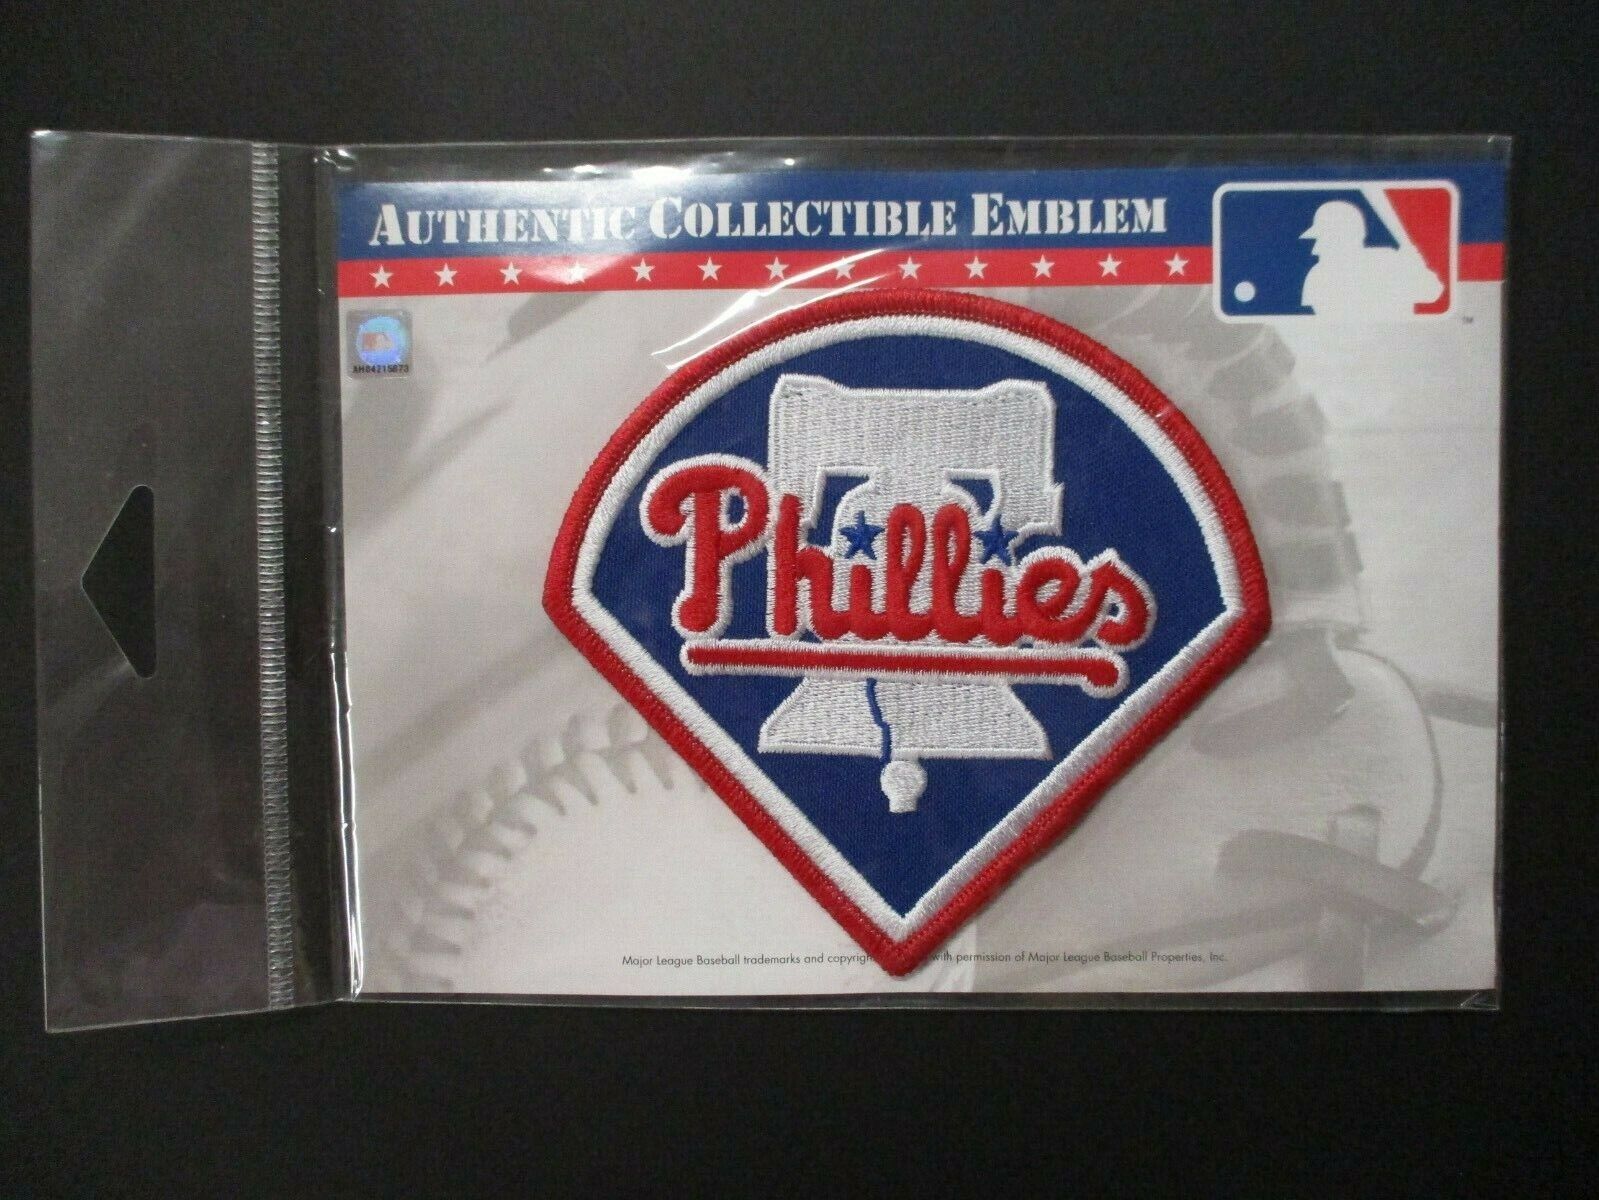 Philadelphia Phillies Authentic Collectible Emblem Patch Size 4 x 4.25 inches